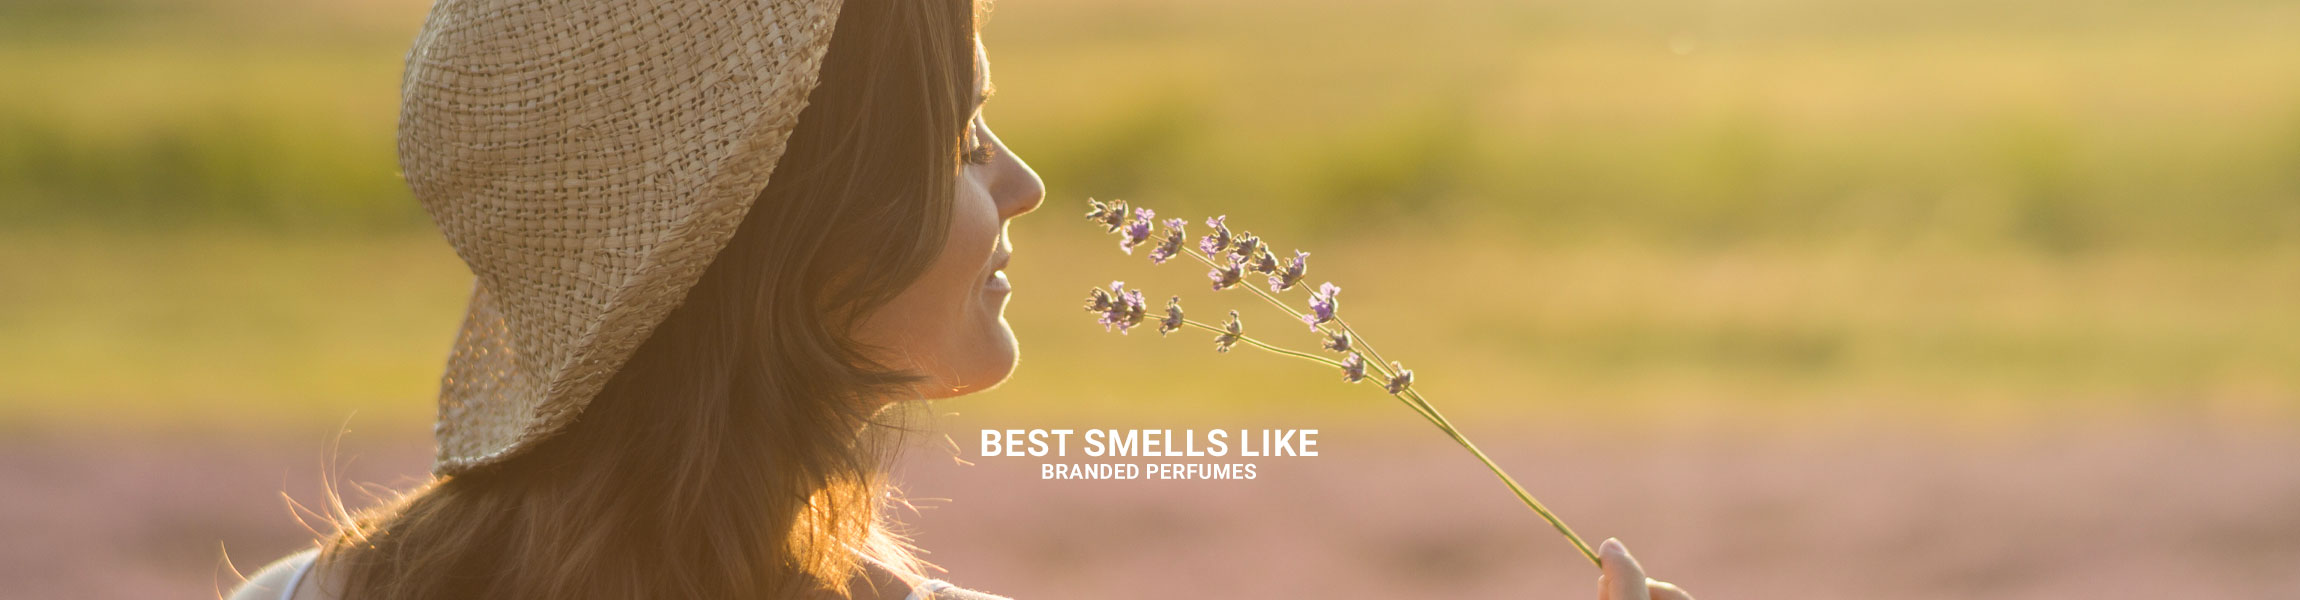 Best Smells like Branded Perfumes